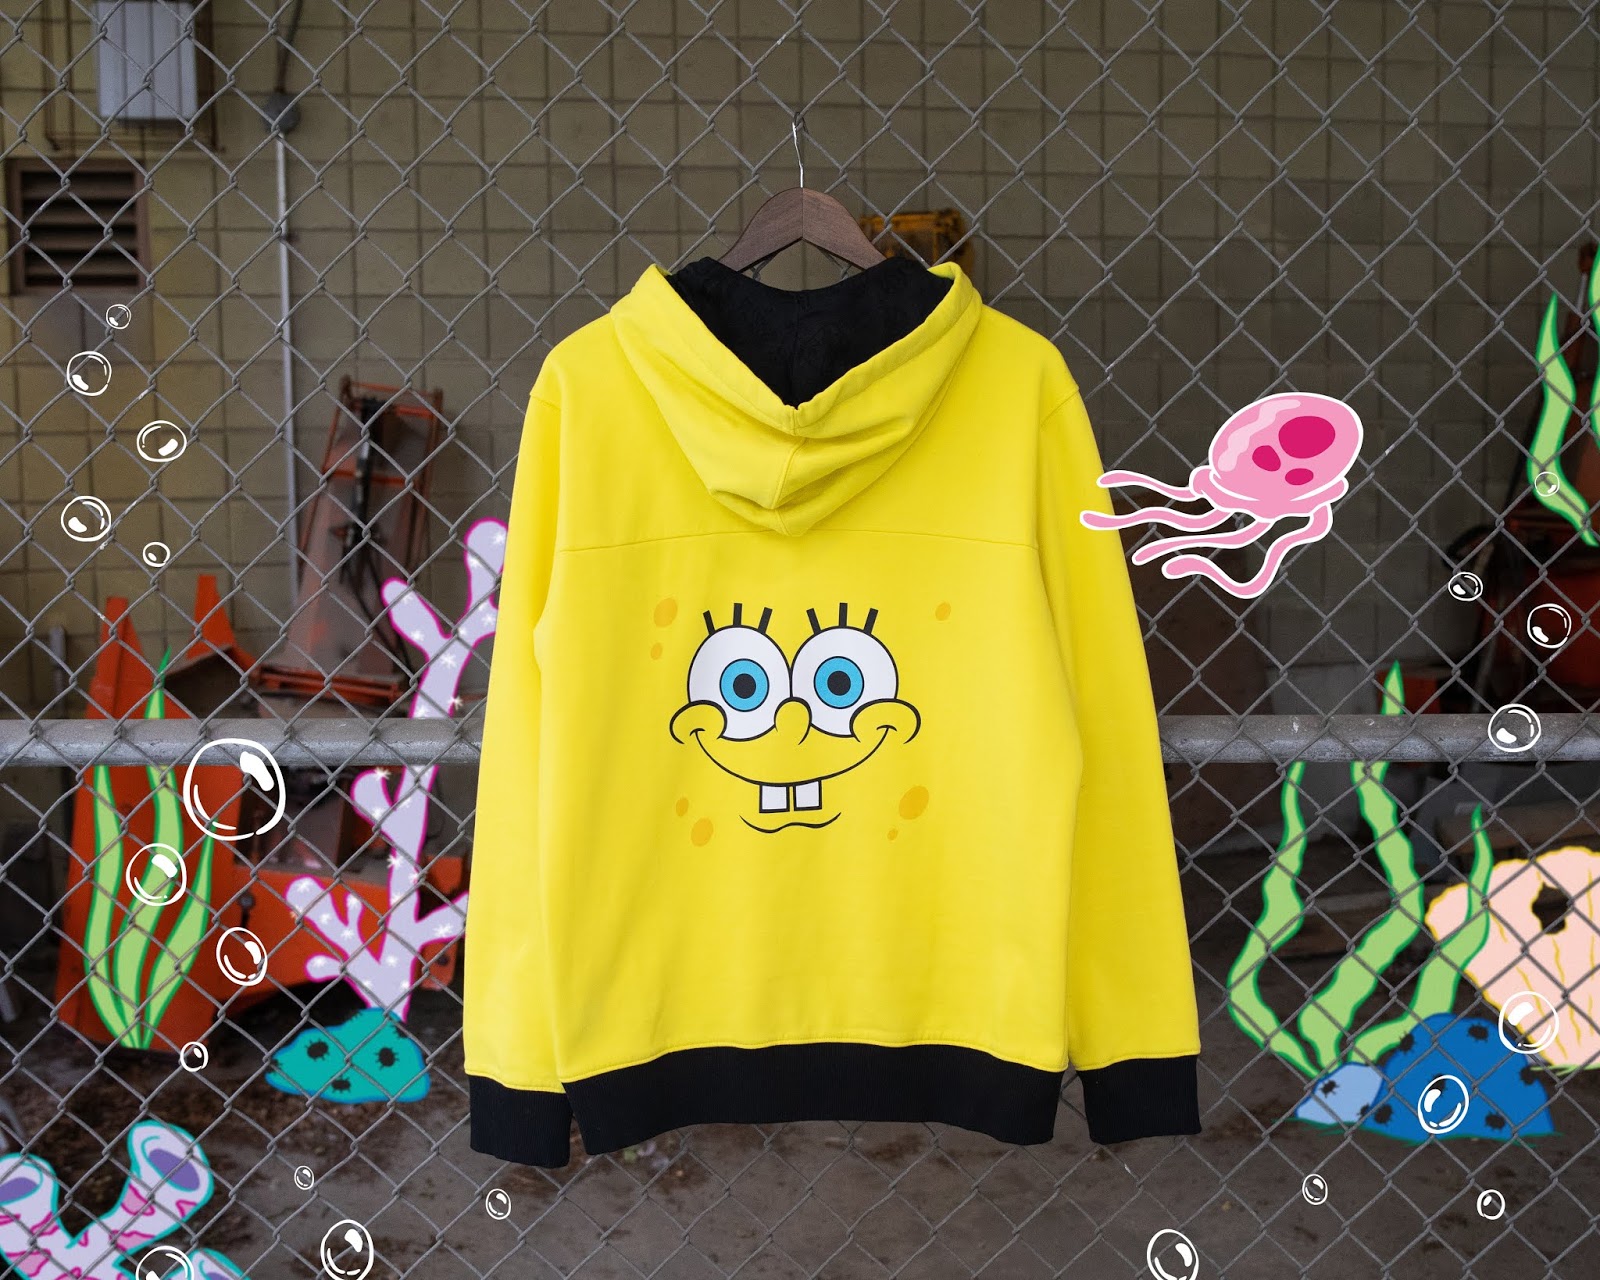 timberland spongebob shirt